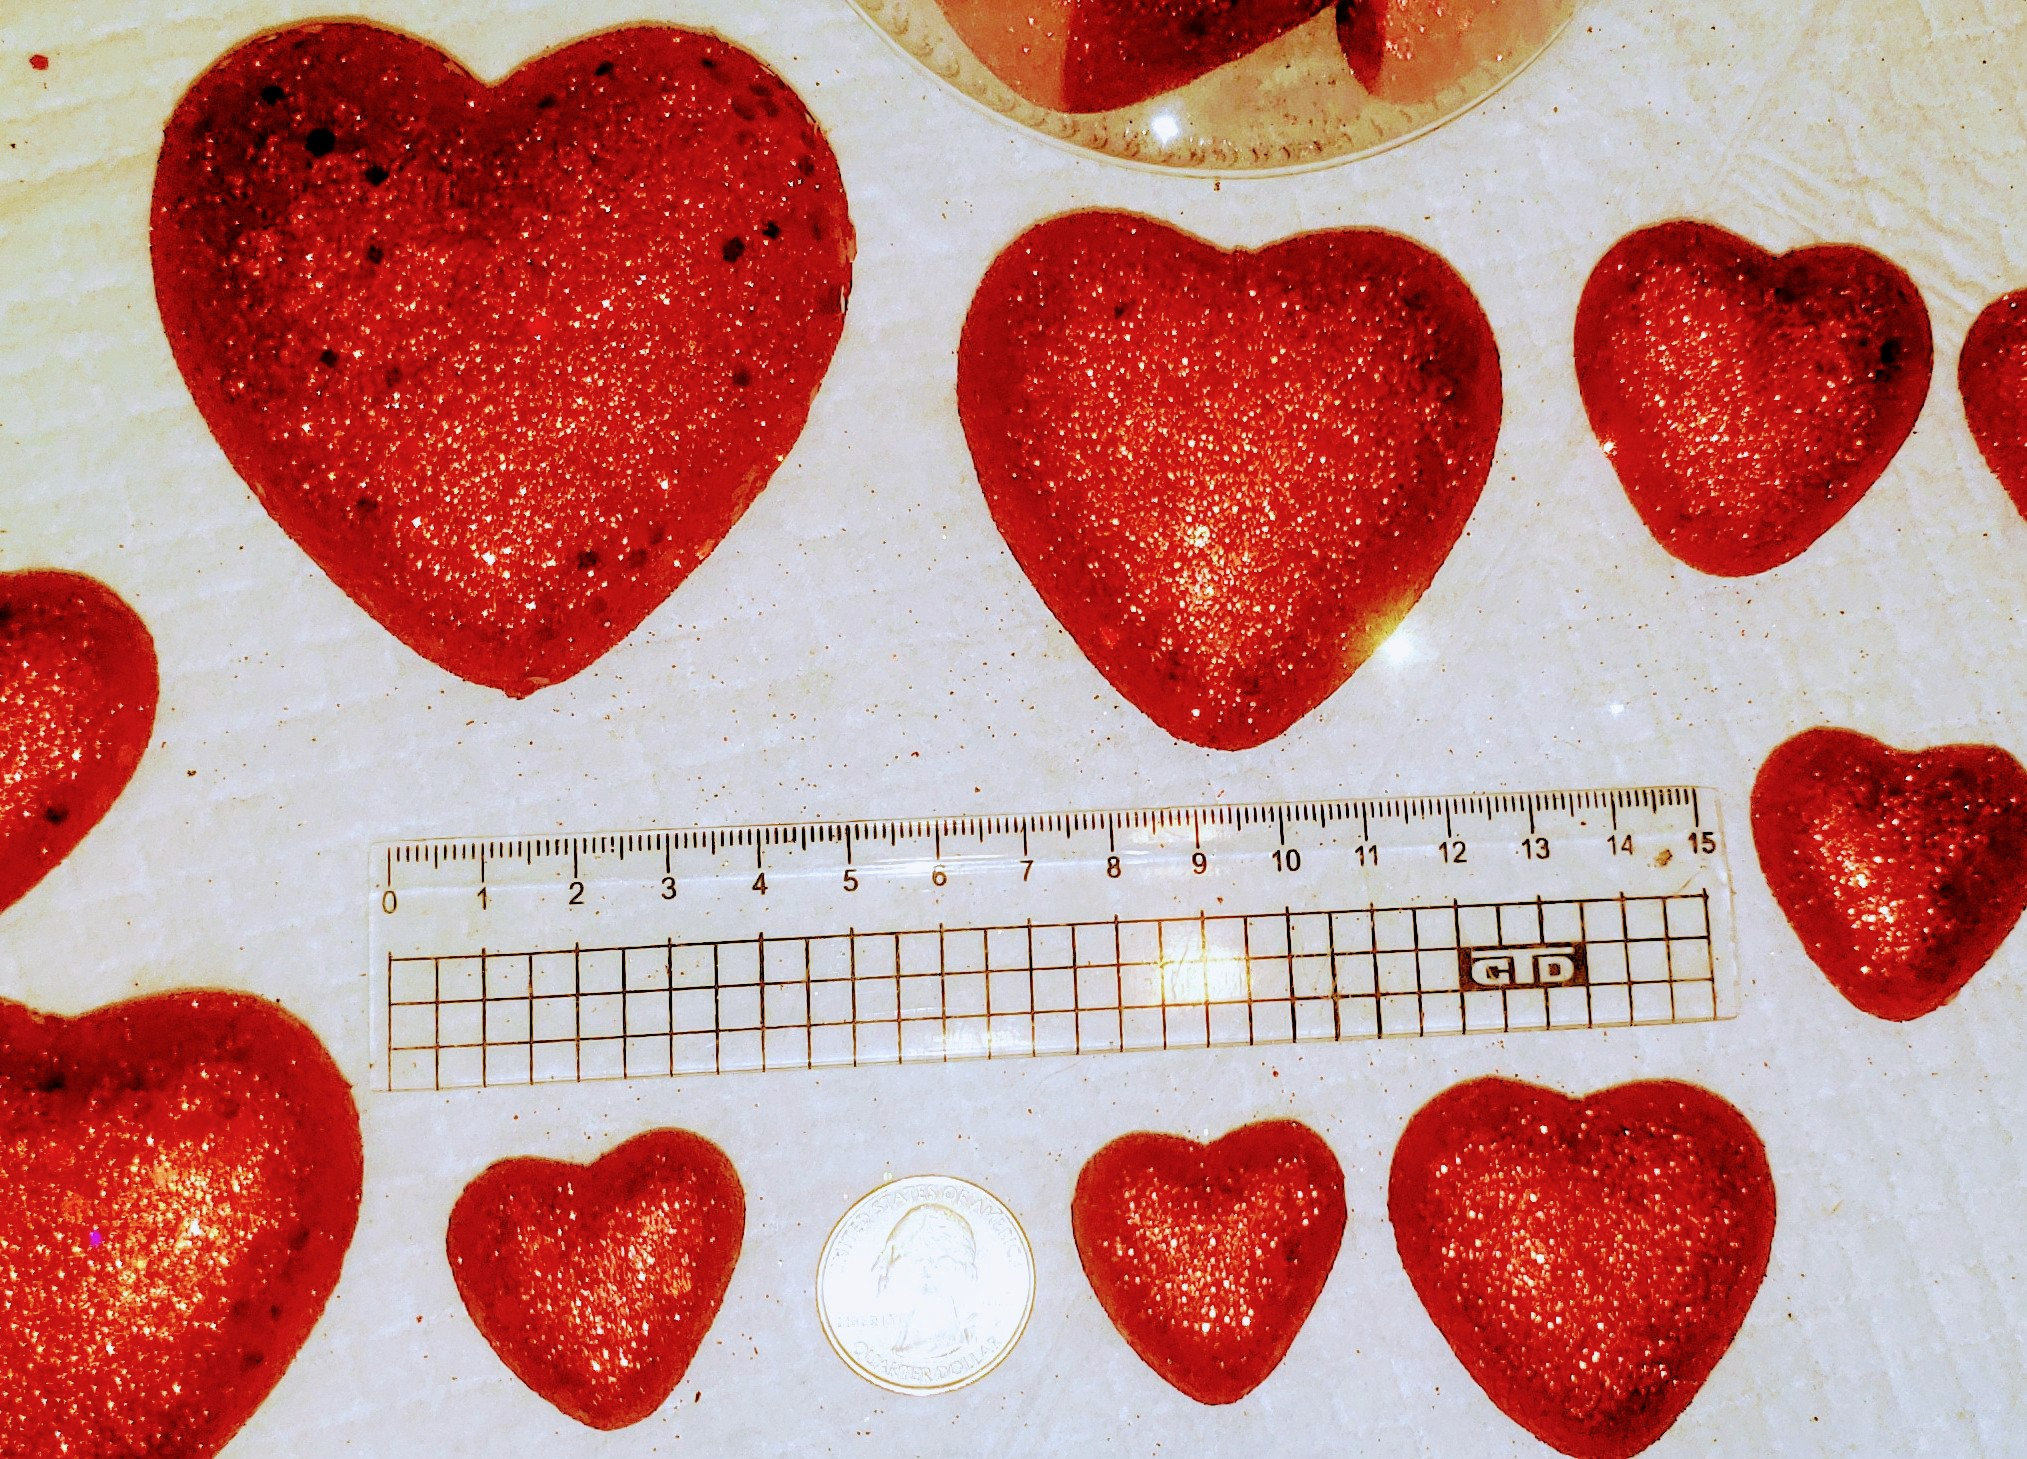 Valentine's Day Heart Scatter Vase Filler